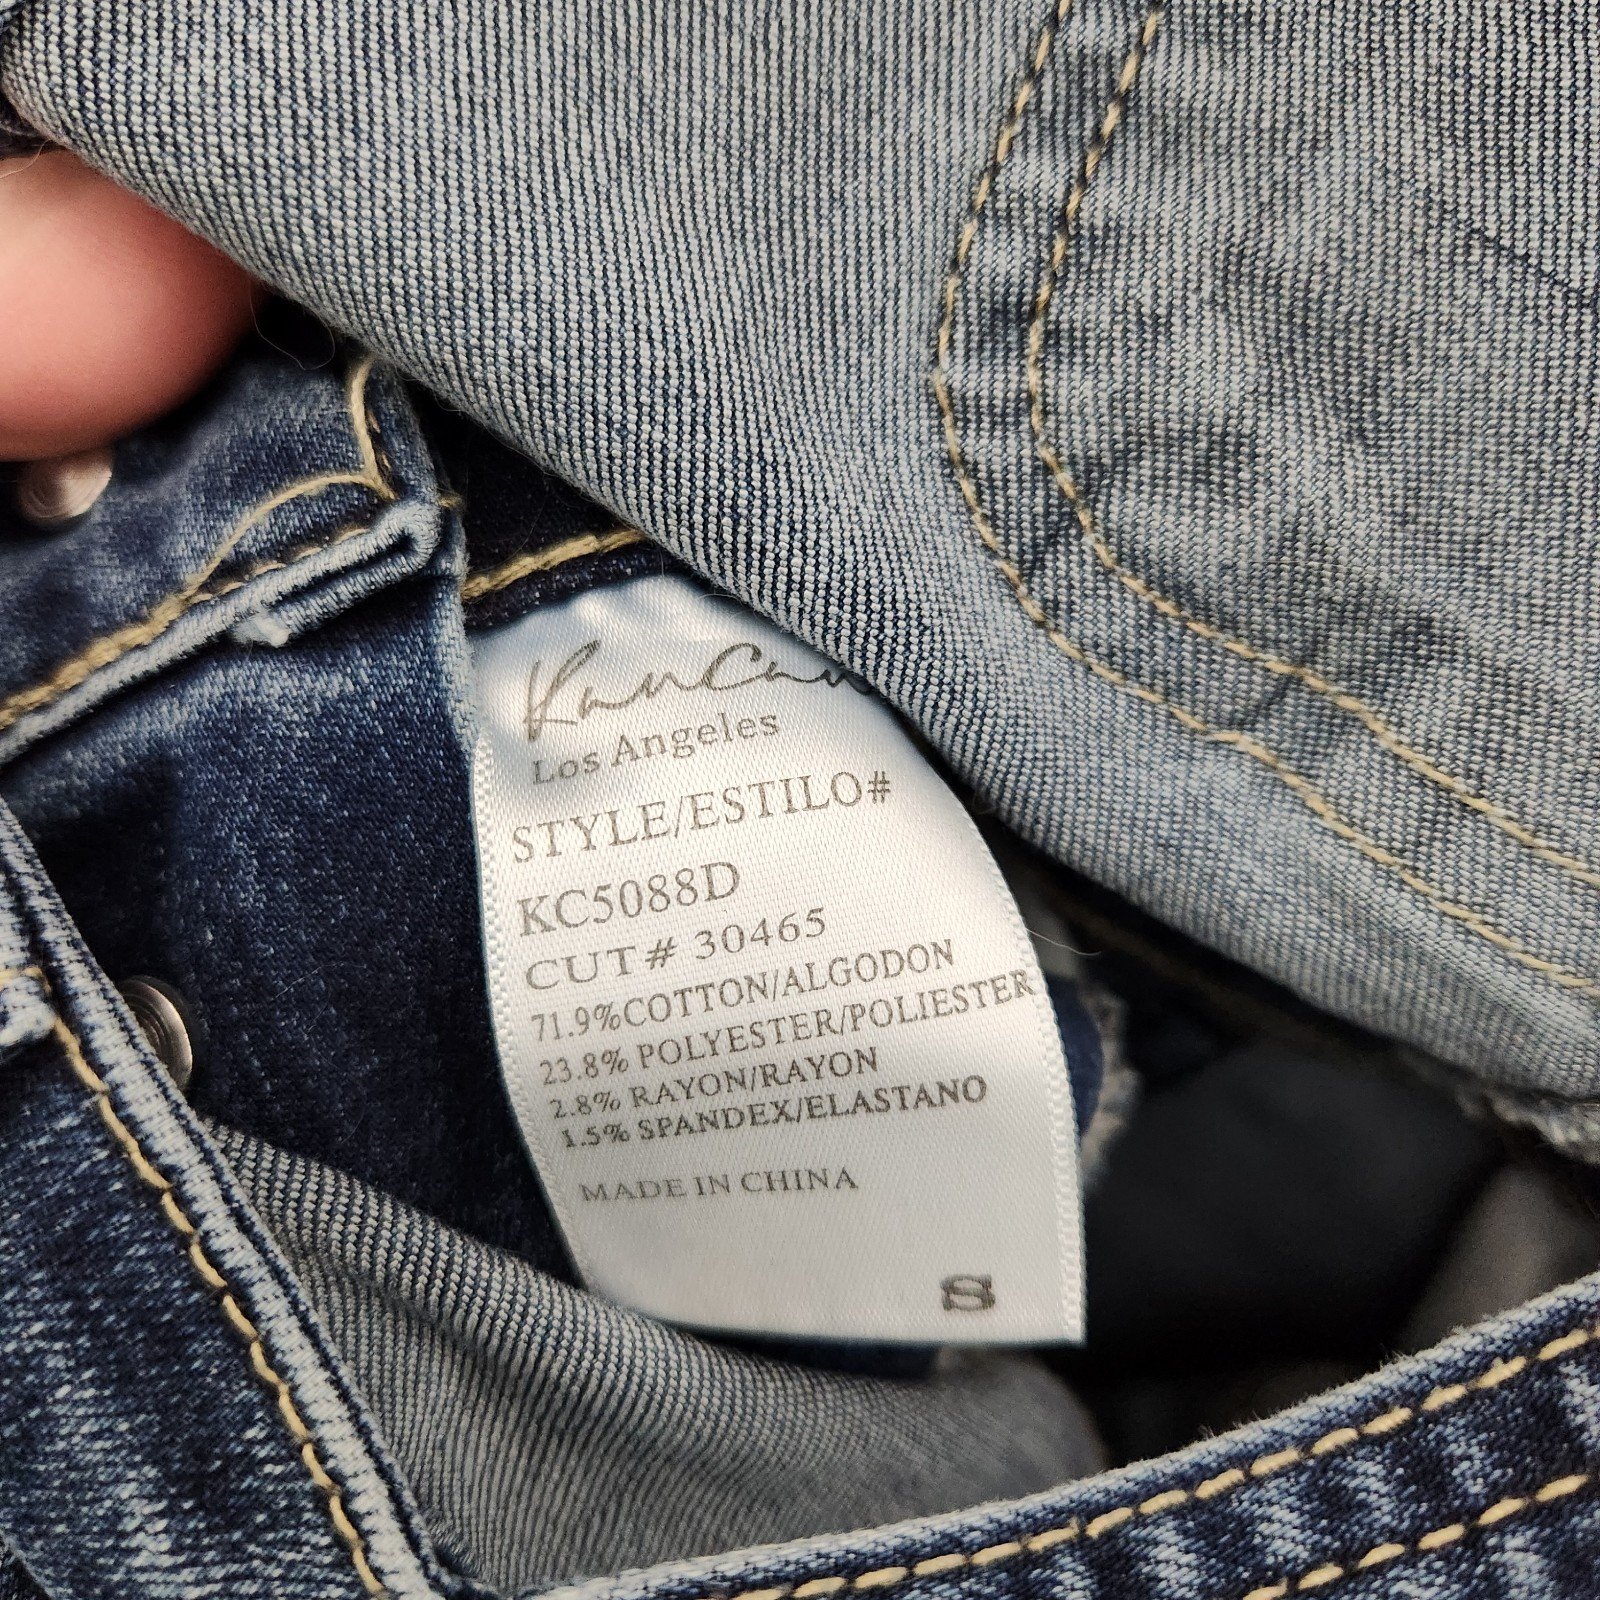 Beautiful KanCan overalls womens small denim distressed medium wash jeans GFcFqtzgS Online Shop